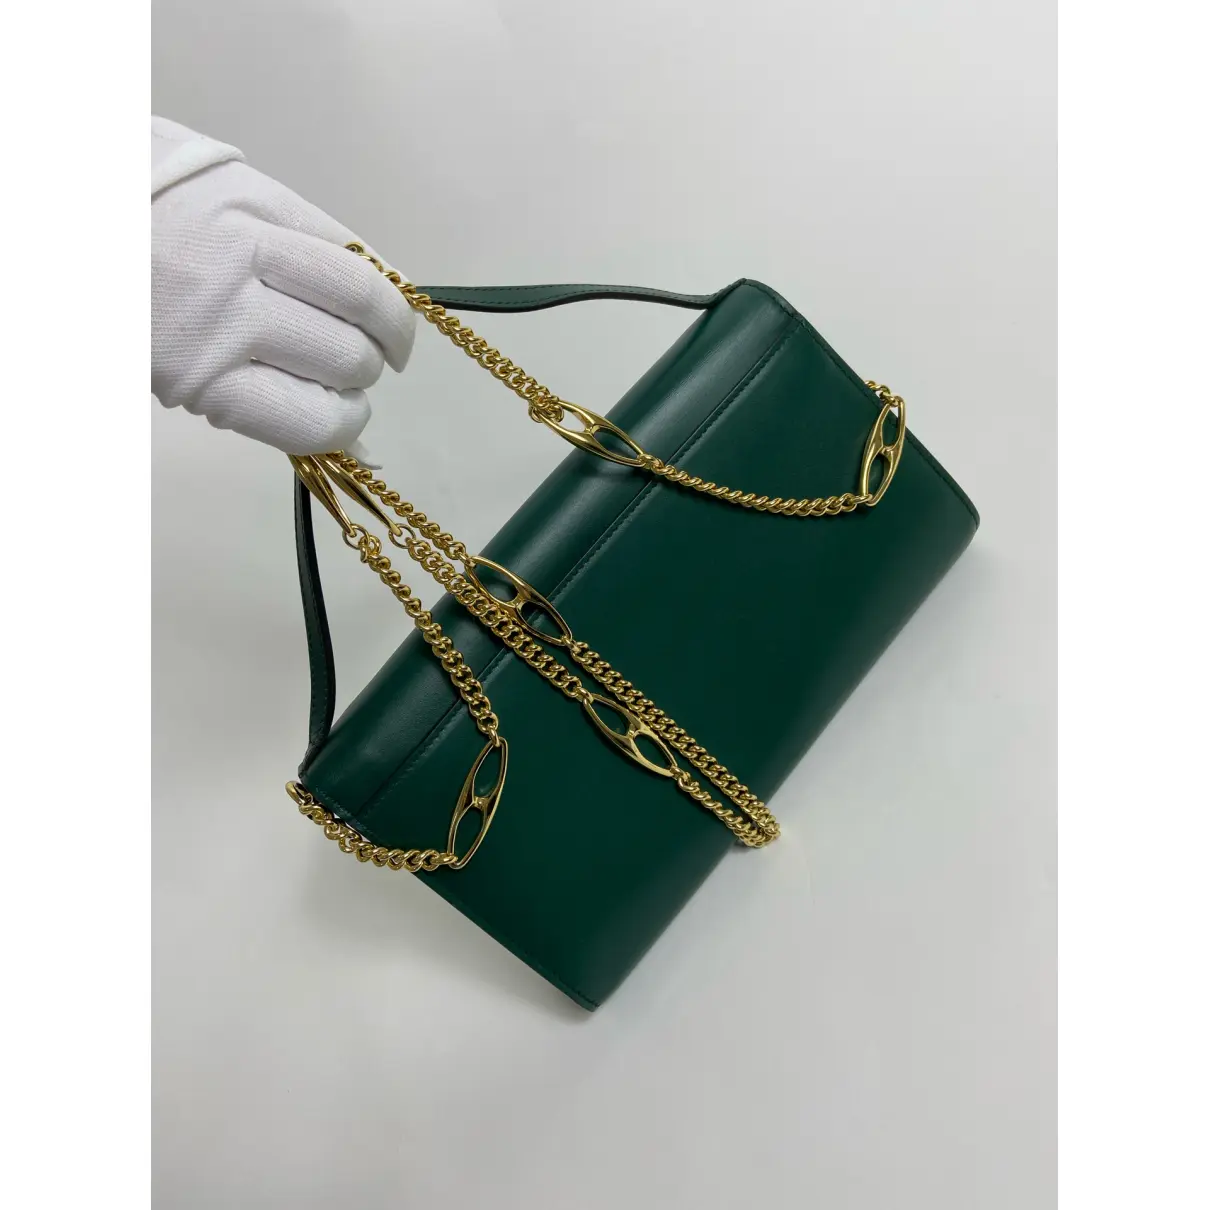 Buy Gucci Zumi leather clutch bag online